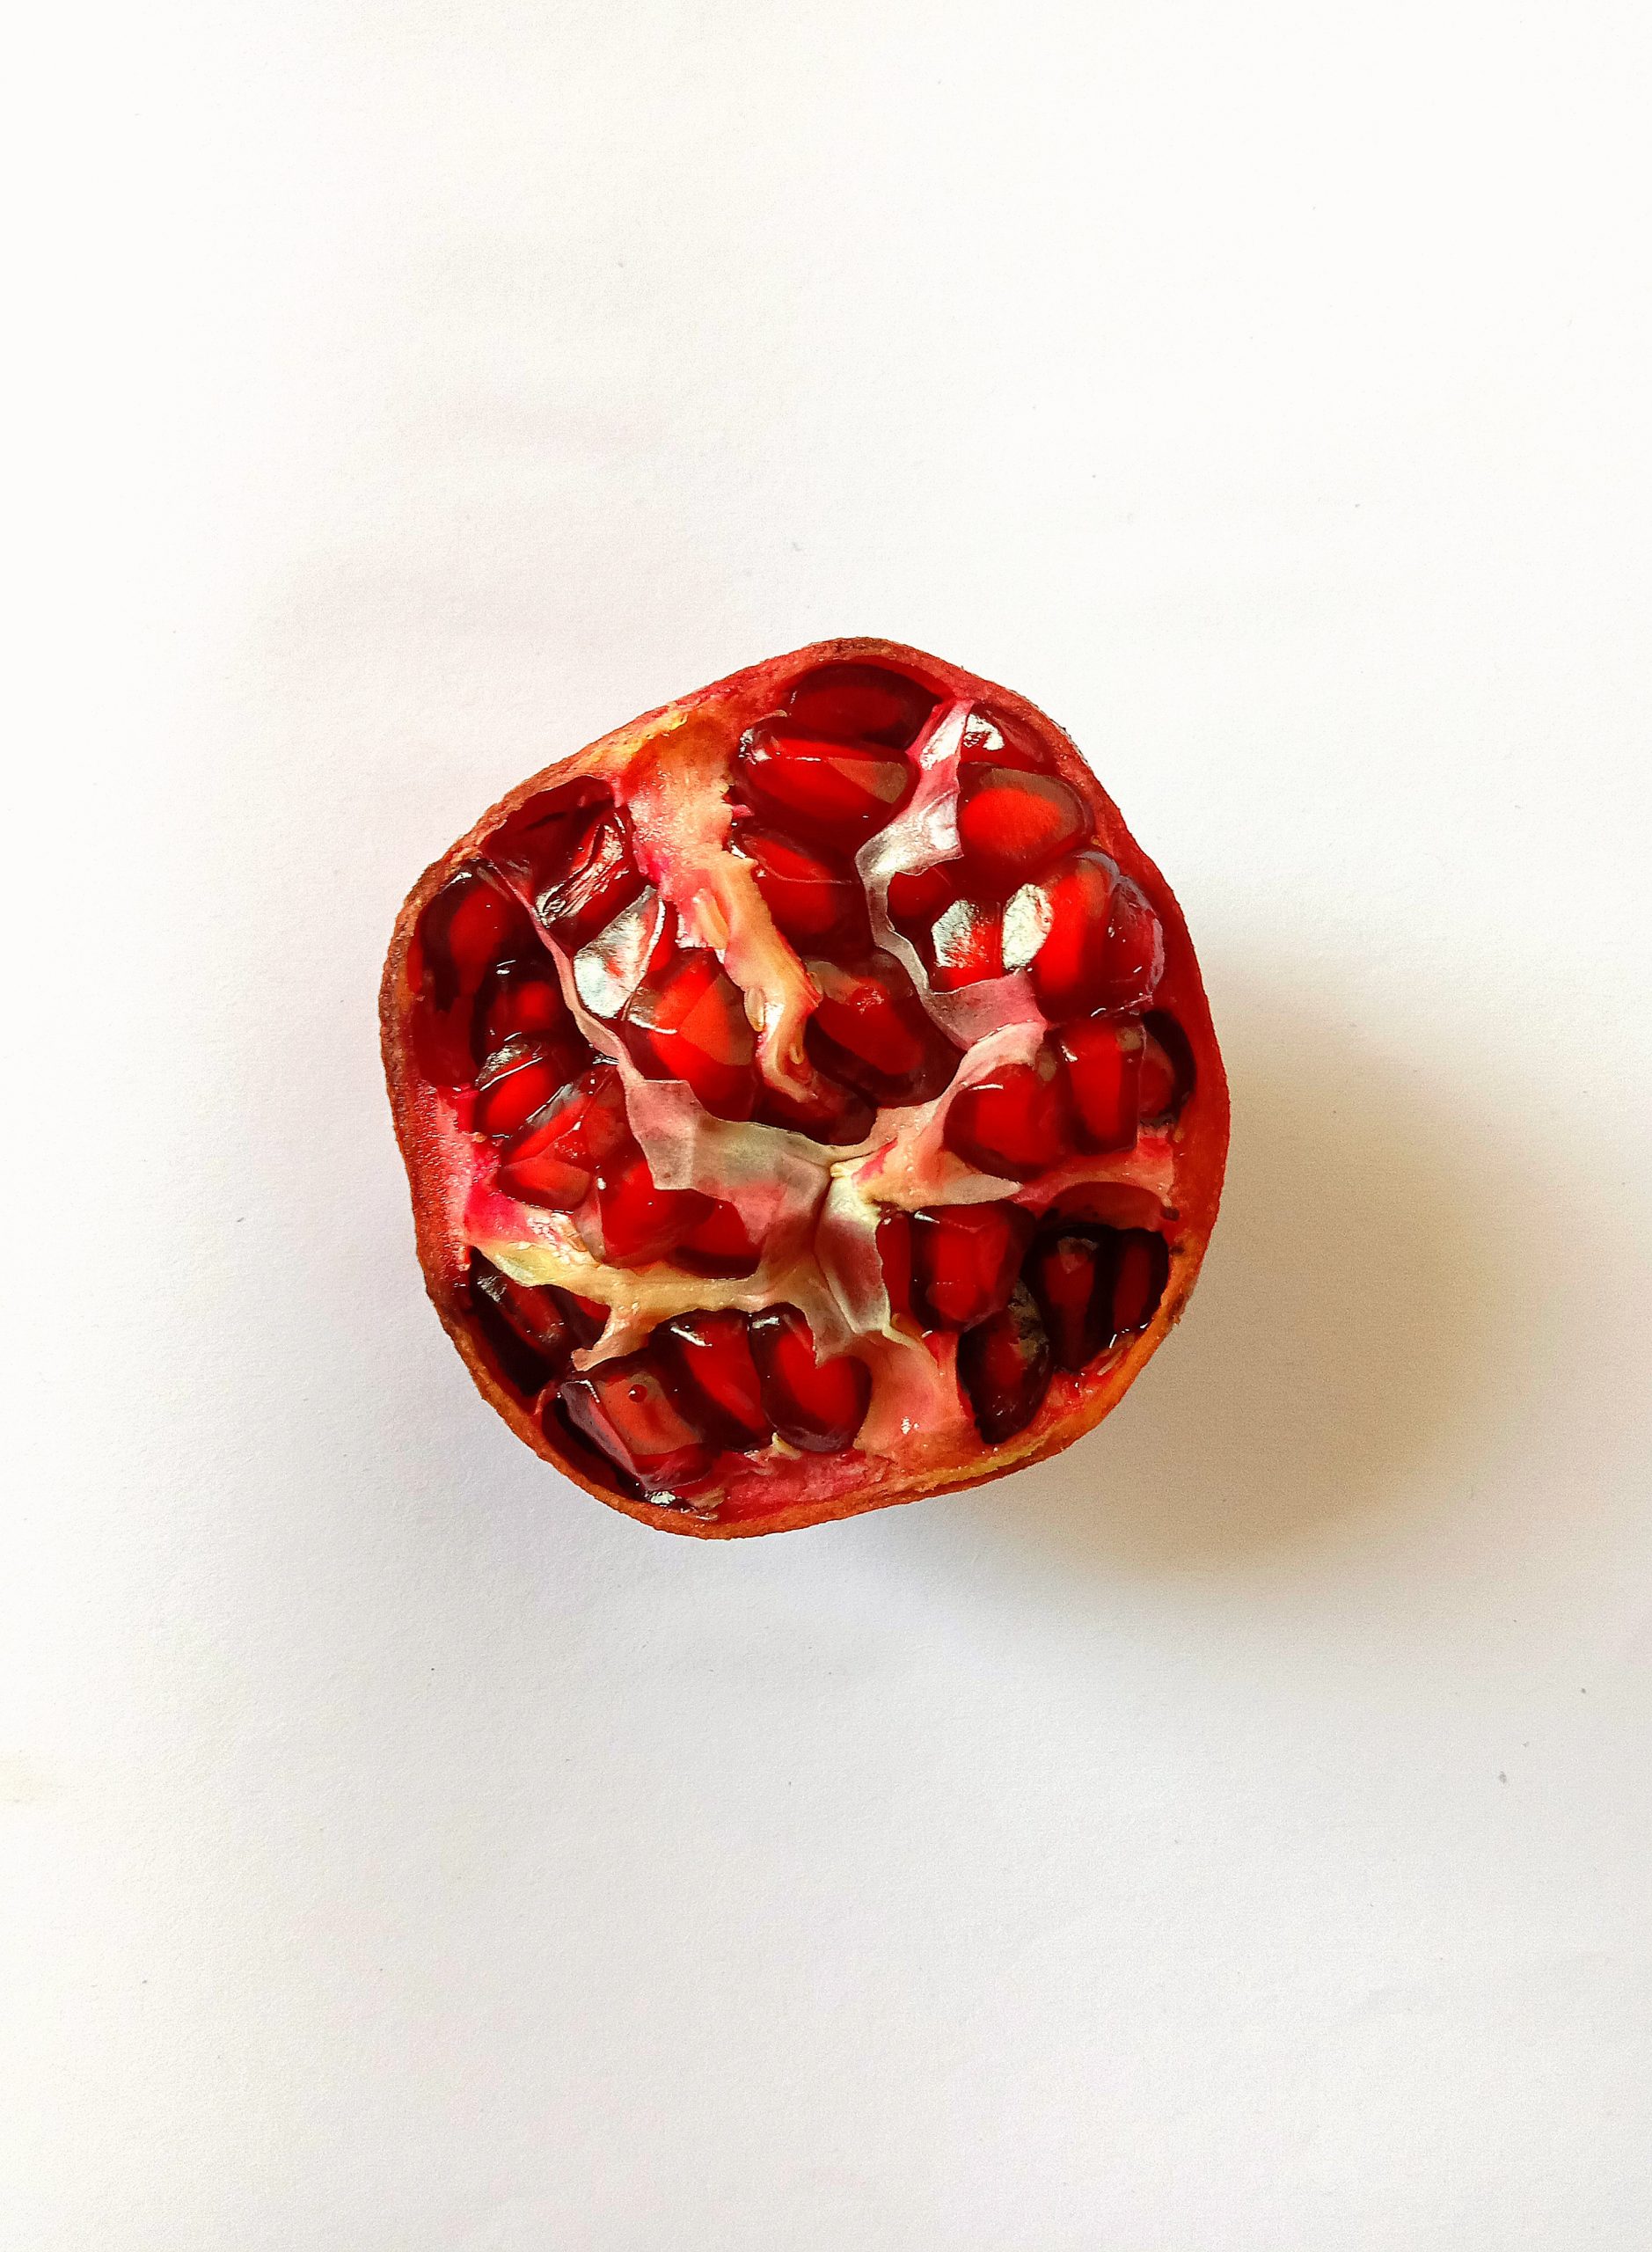 A cut piece of pomegranate